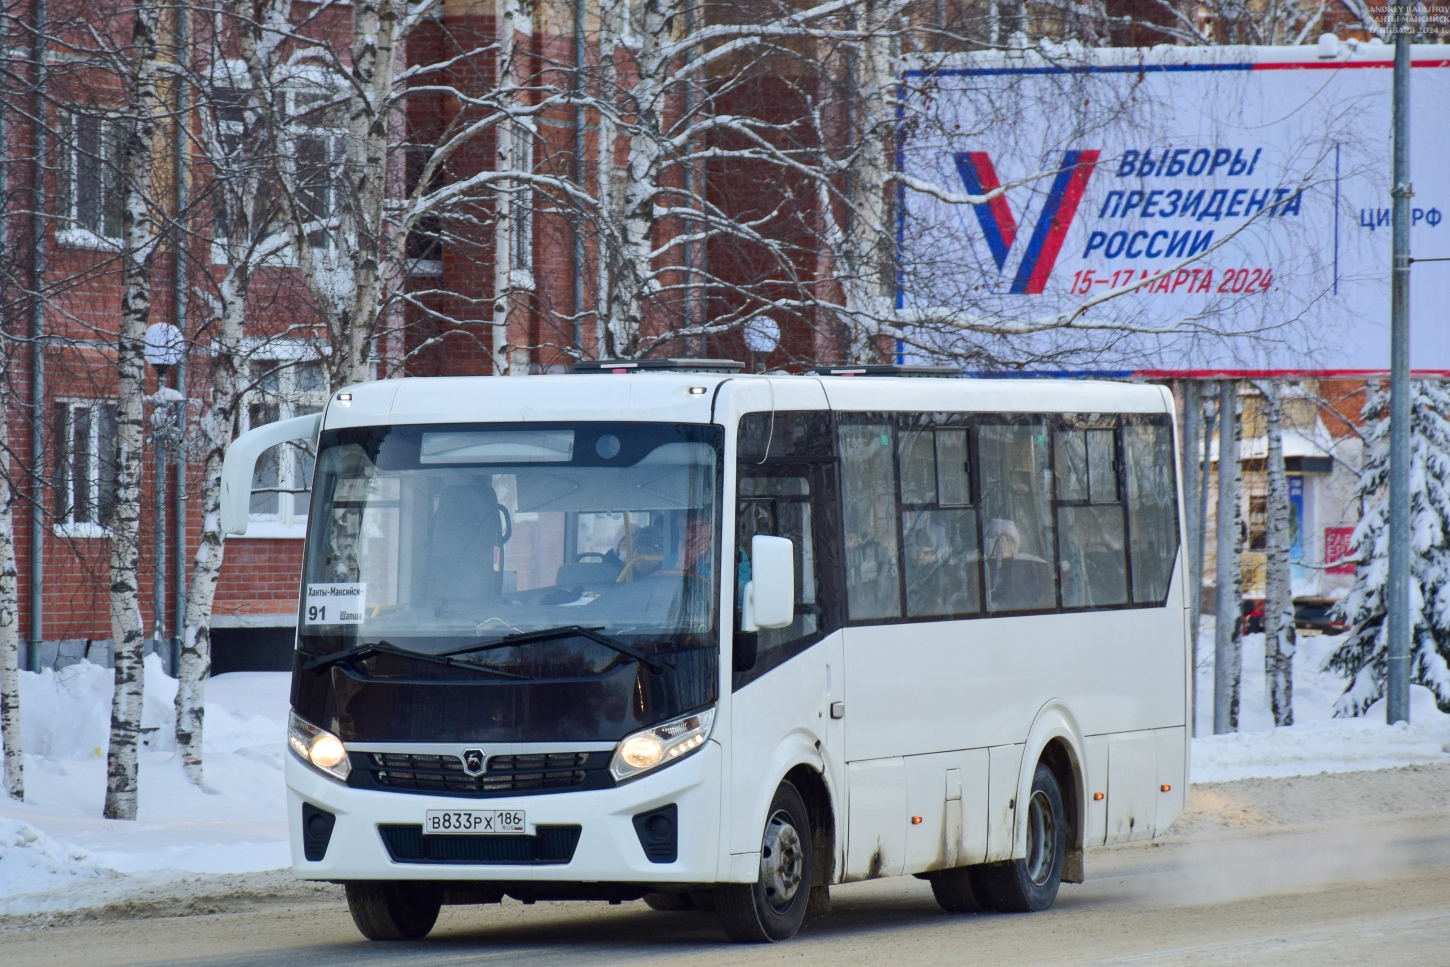 Surgut, ПАЗ-320405-04 "Vector Next" №: В 833 РХ 186